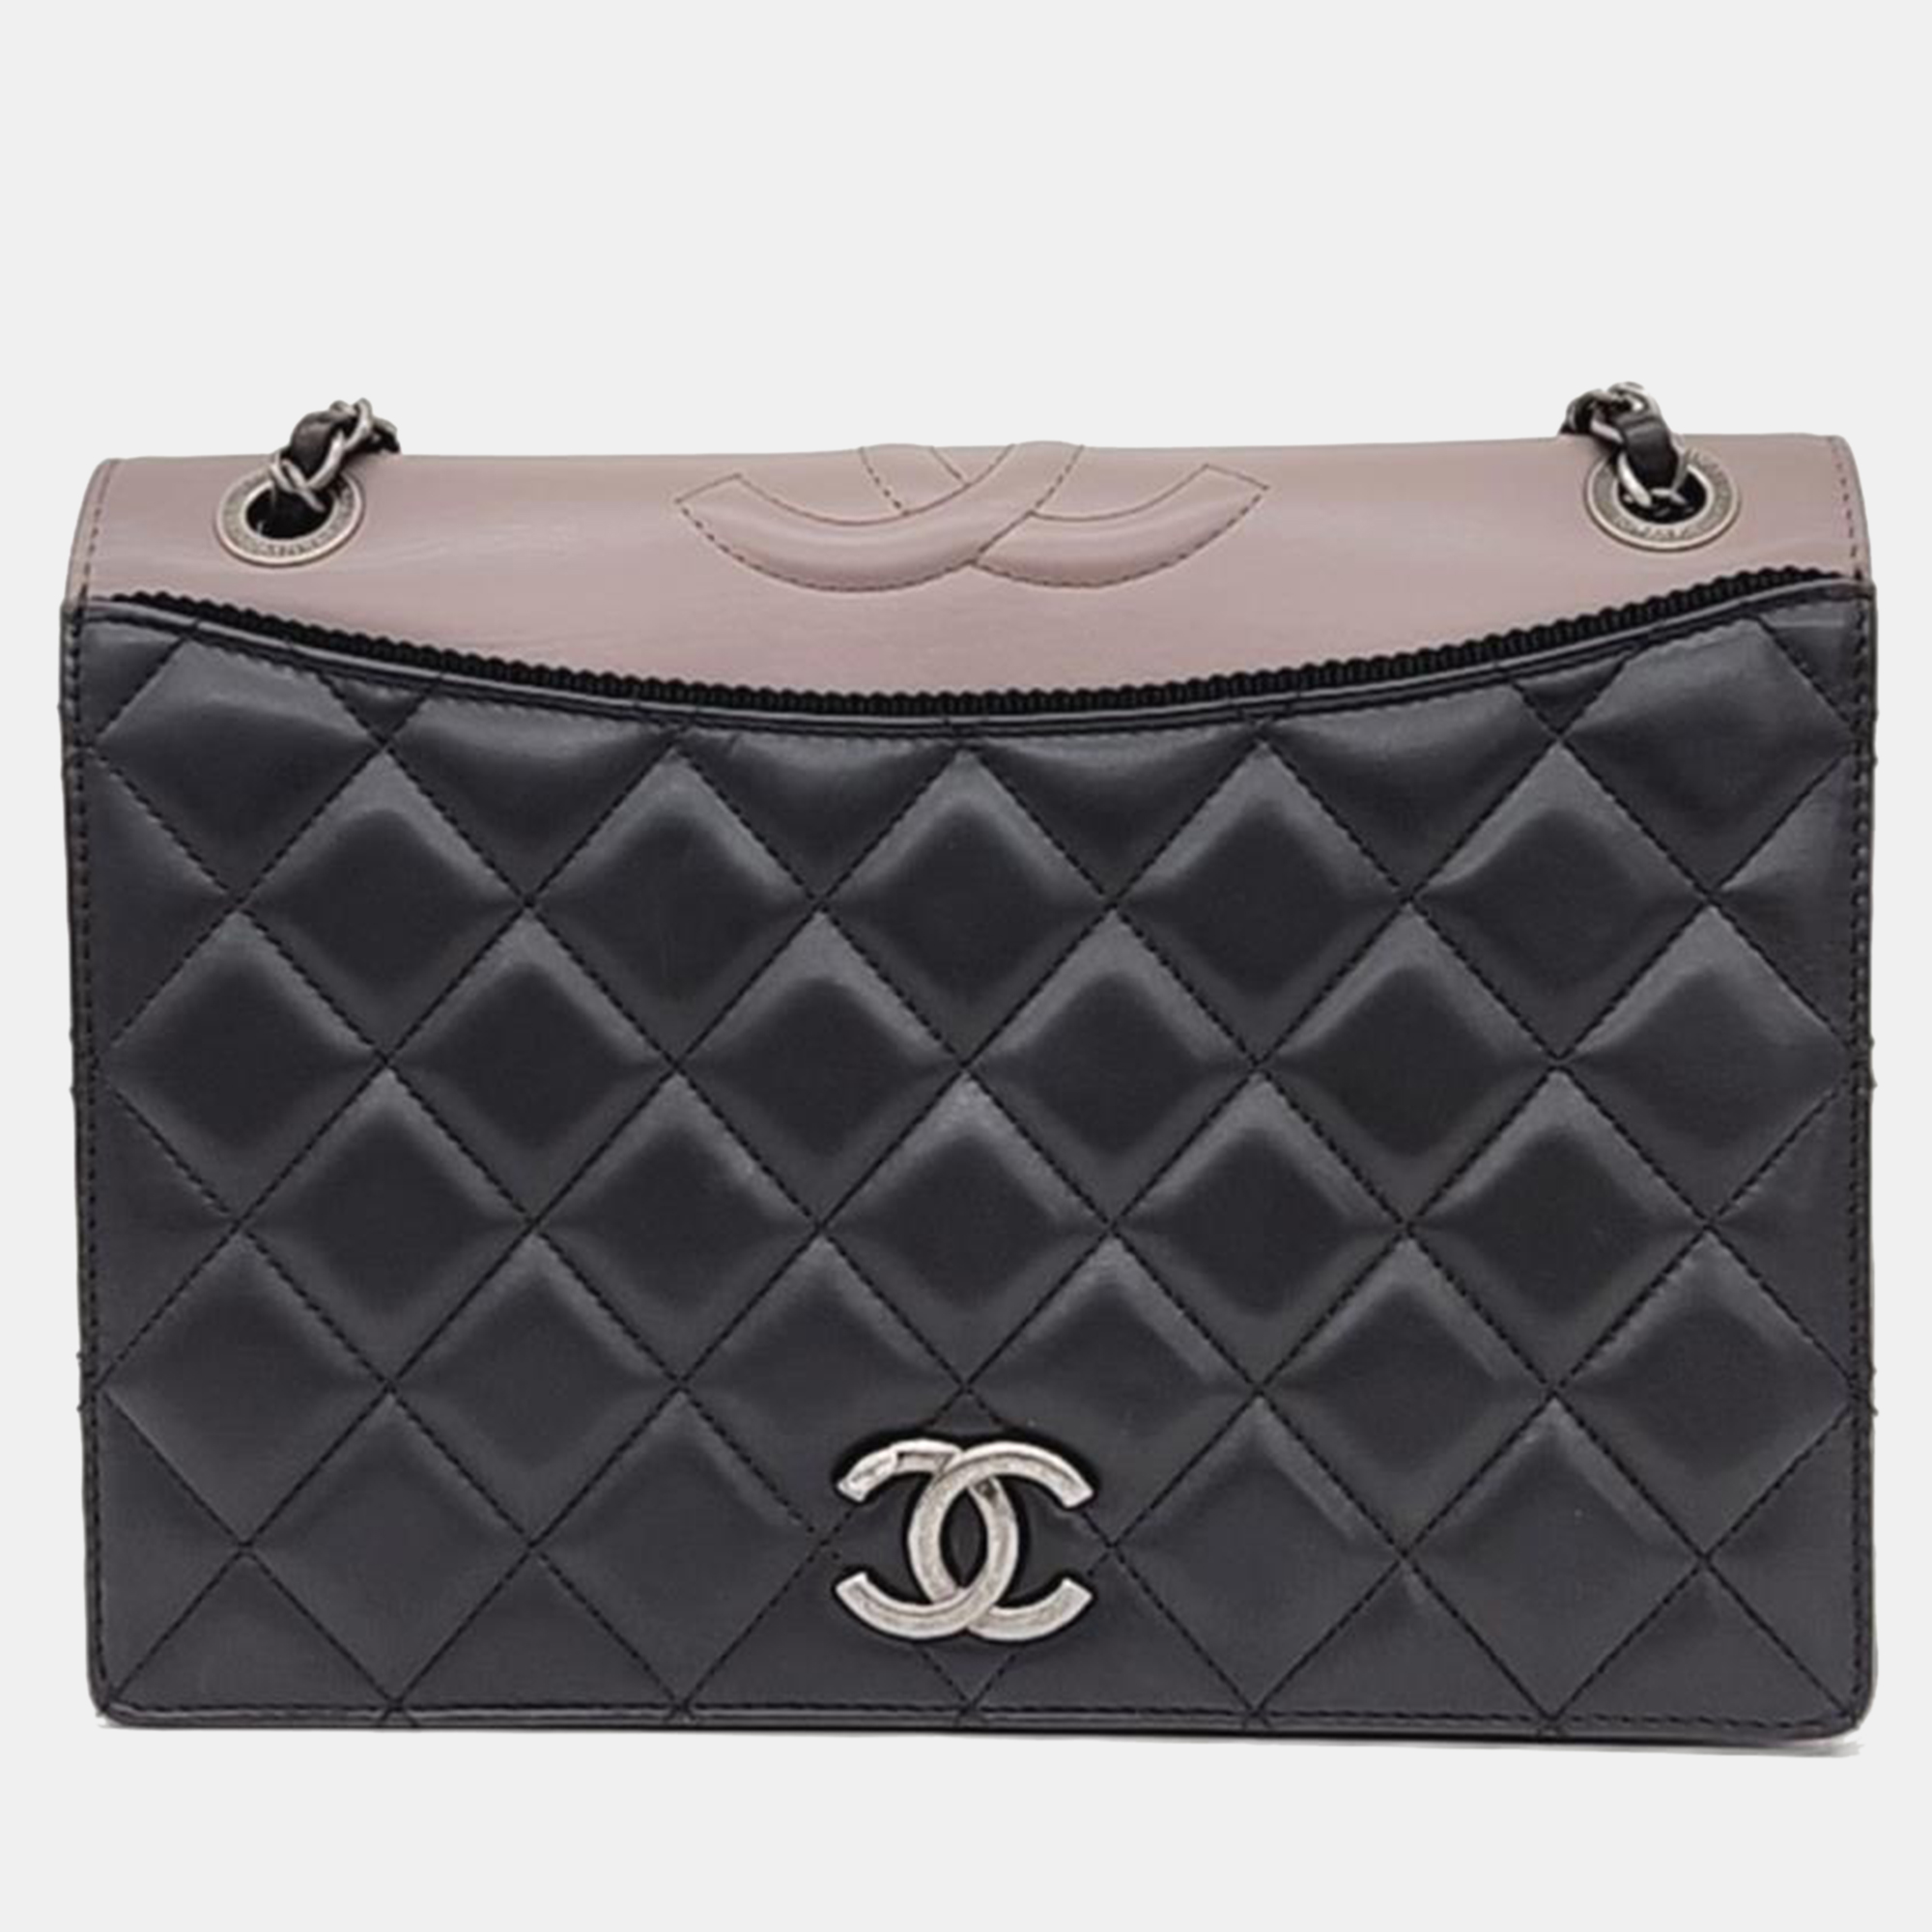 Chanel chain shoulder bag a93013